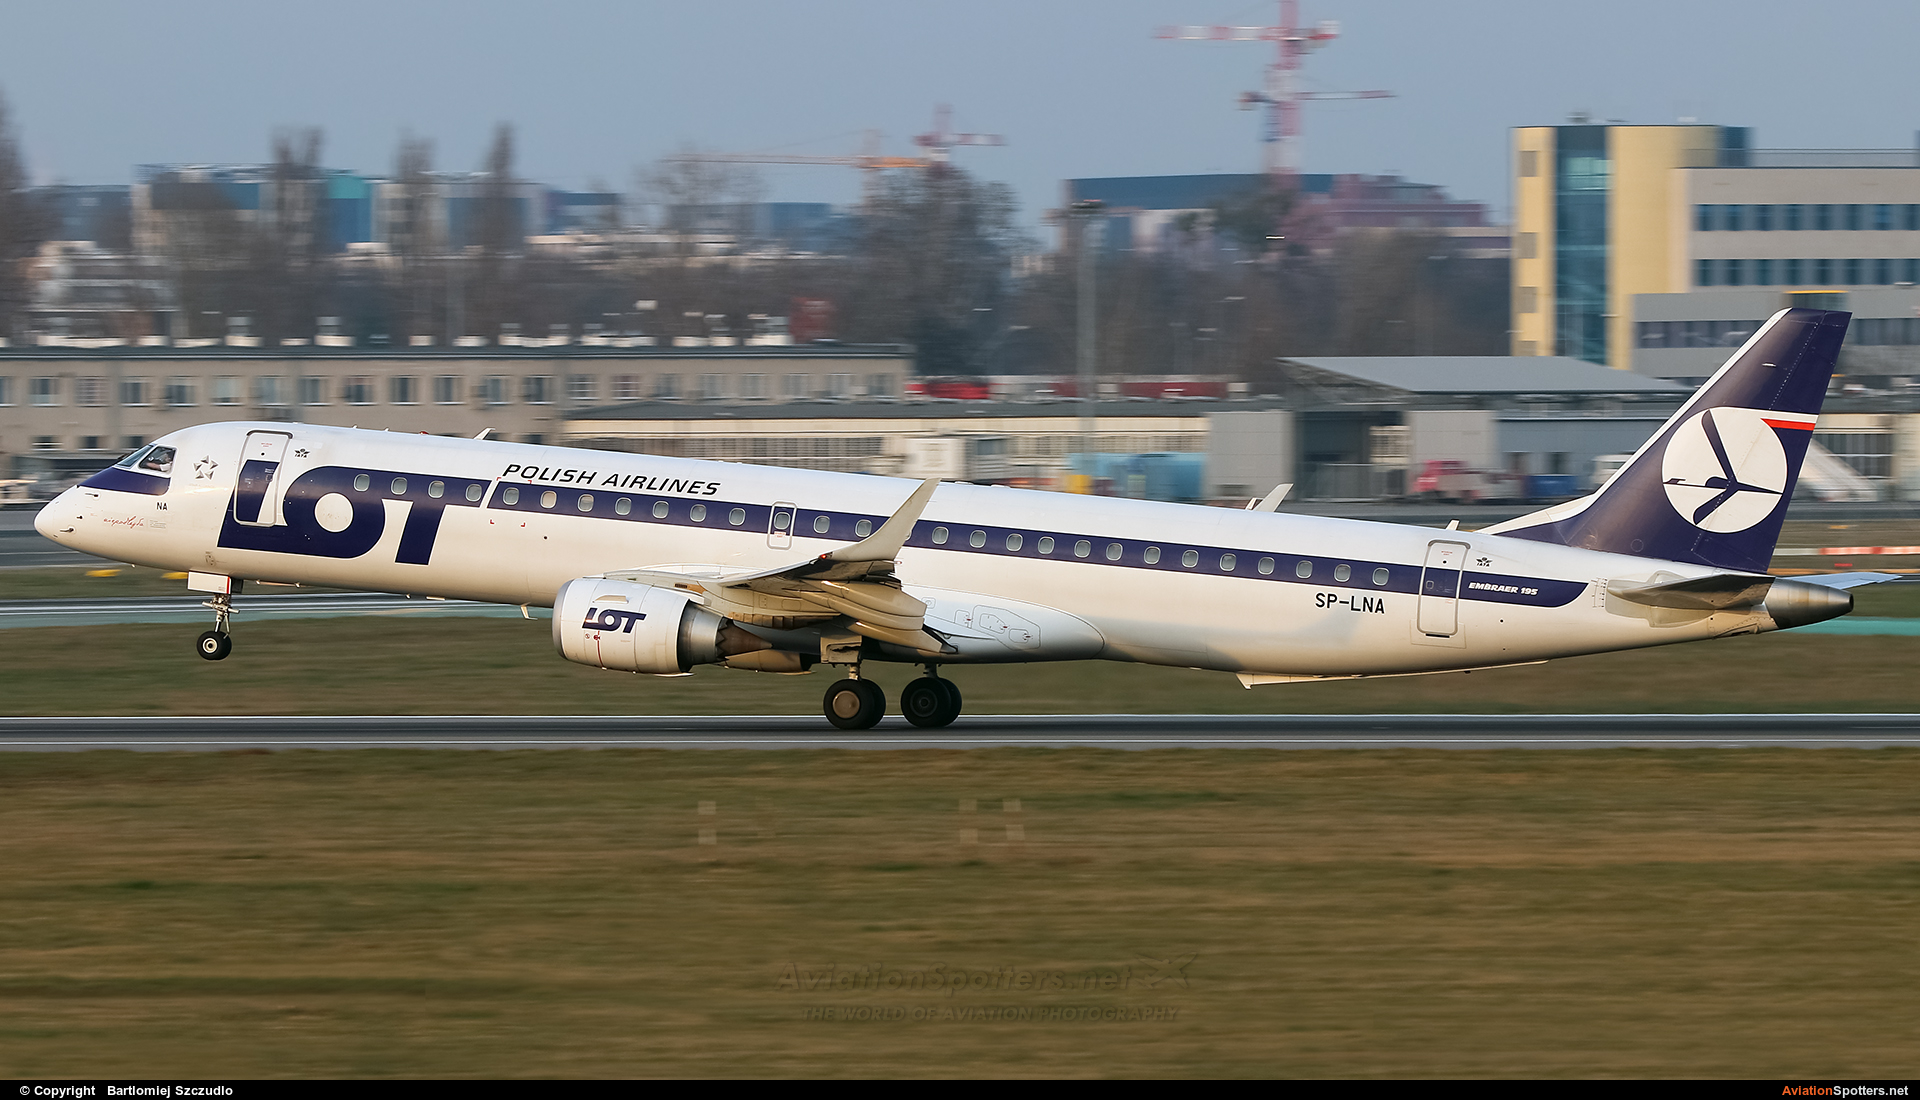 LOT - Polish Airlines  -  195LR  (SP-LNA) By Bartlomiej Szczudlo  (BartekSzczudlo)